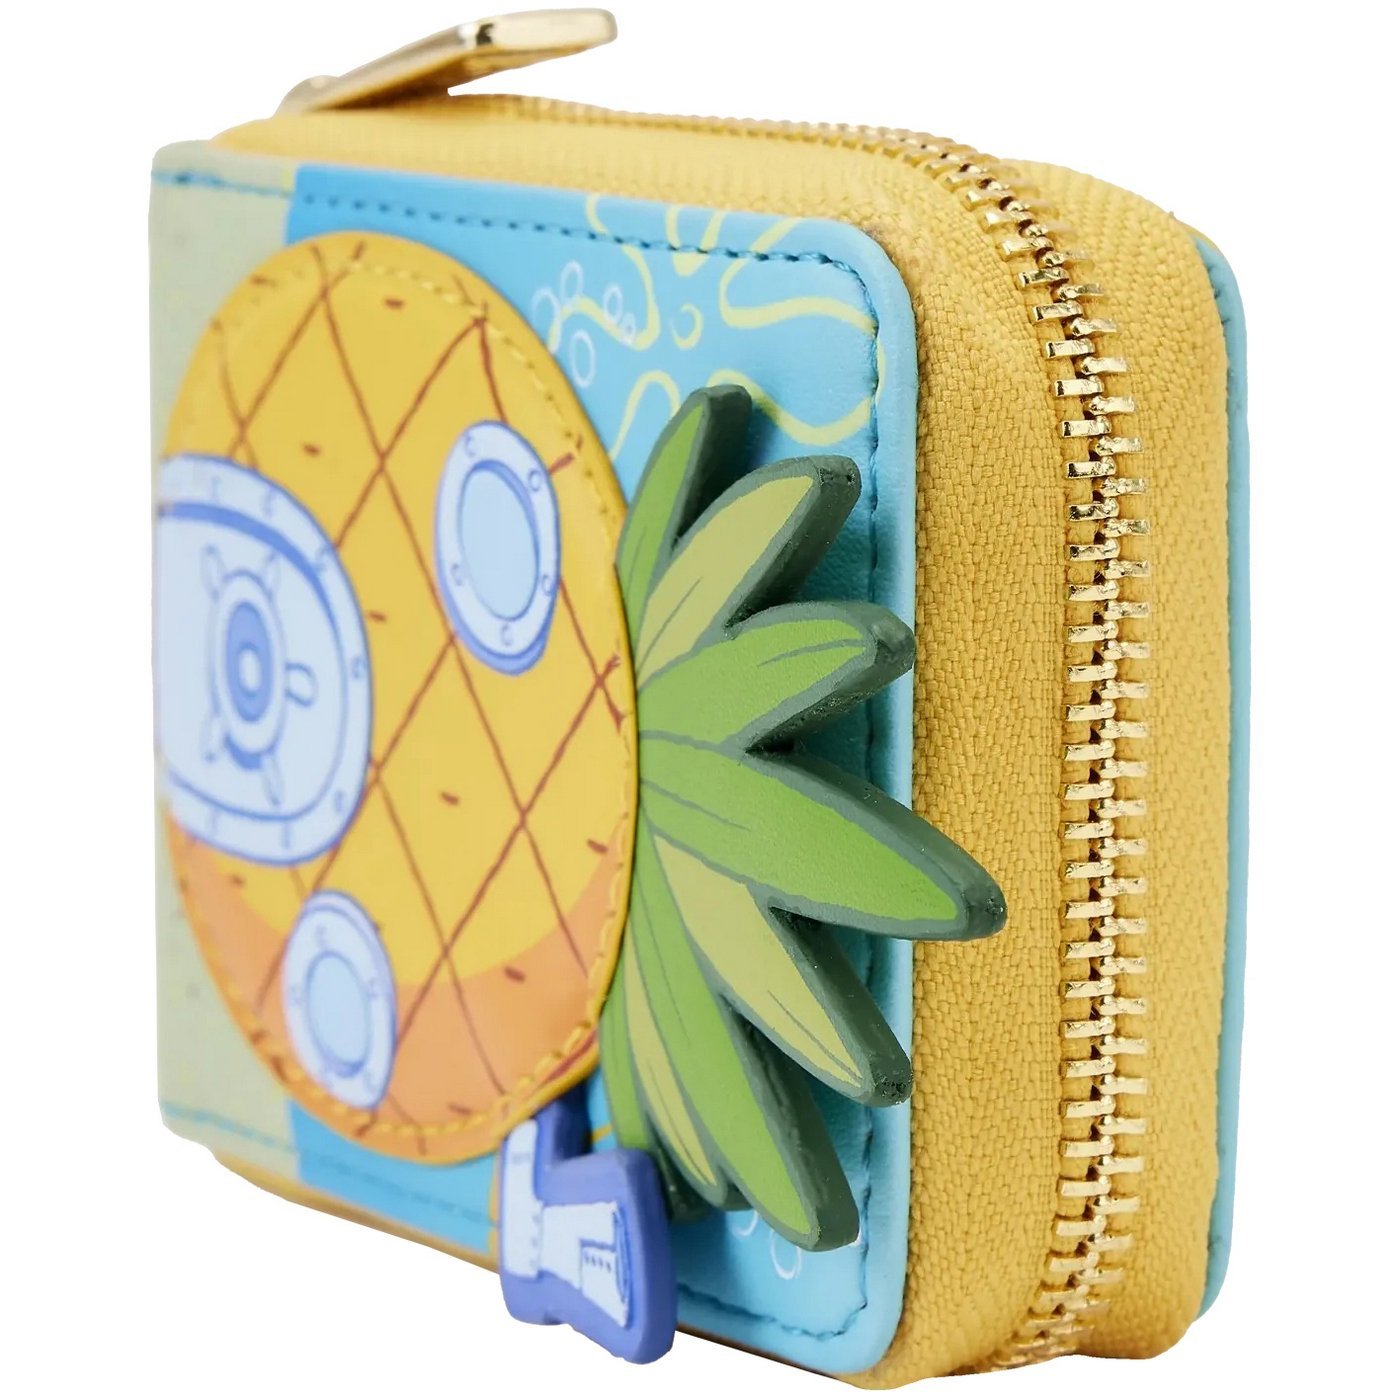 SpongeBob Squarepants Pineapple House